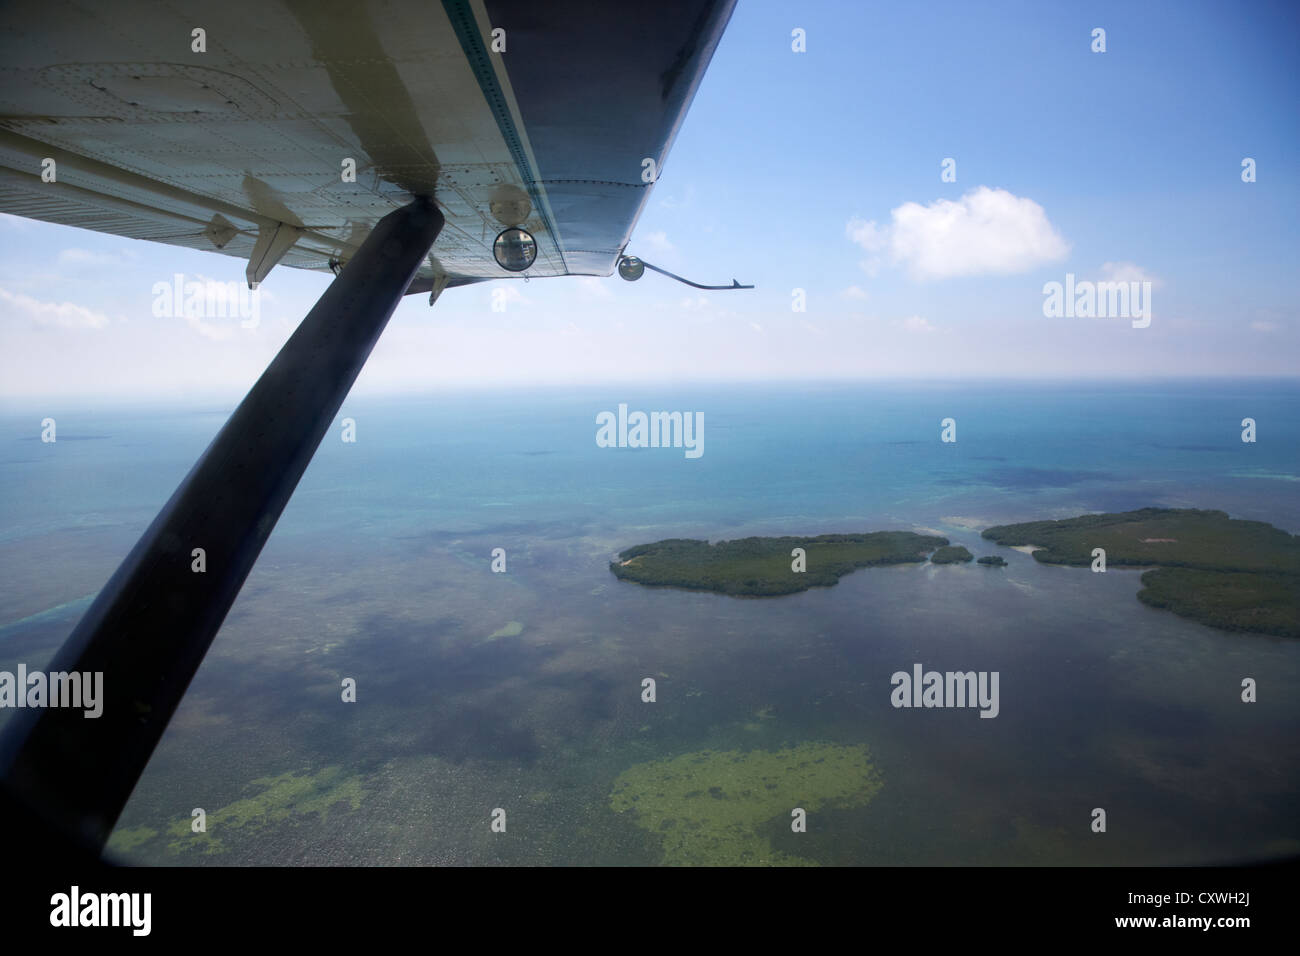 Flug über Mann Schlüssel in das Maultier Schlüssel Teil des Key West national Wildlife Refuge Inseln Florida Keys usa Stockfoto